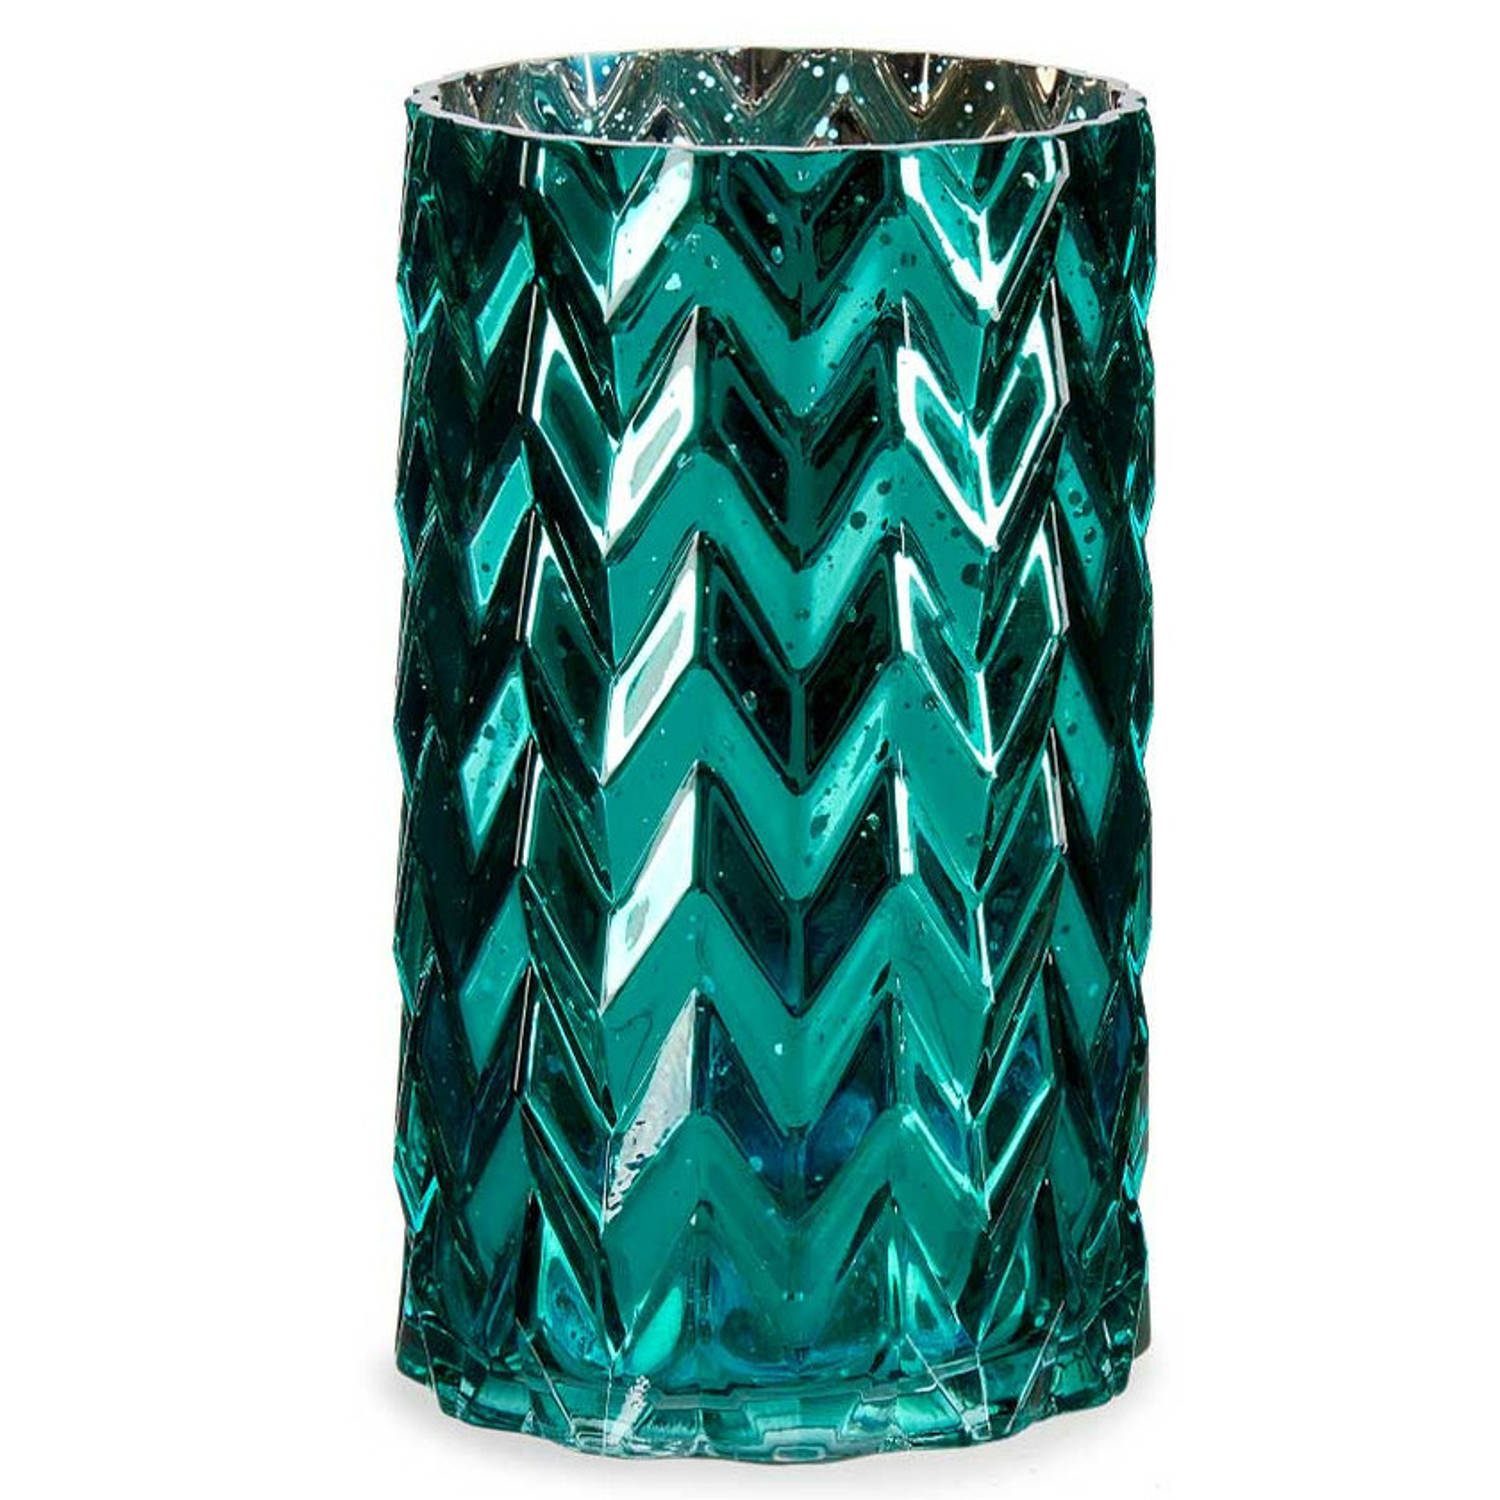 Bloemenvaas luxe decoratie glas turquoise blauw 11 x 20 cm Vazen